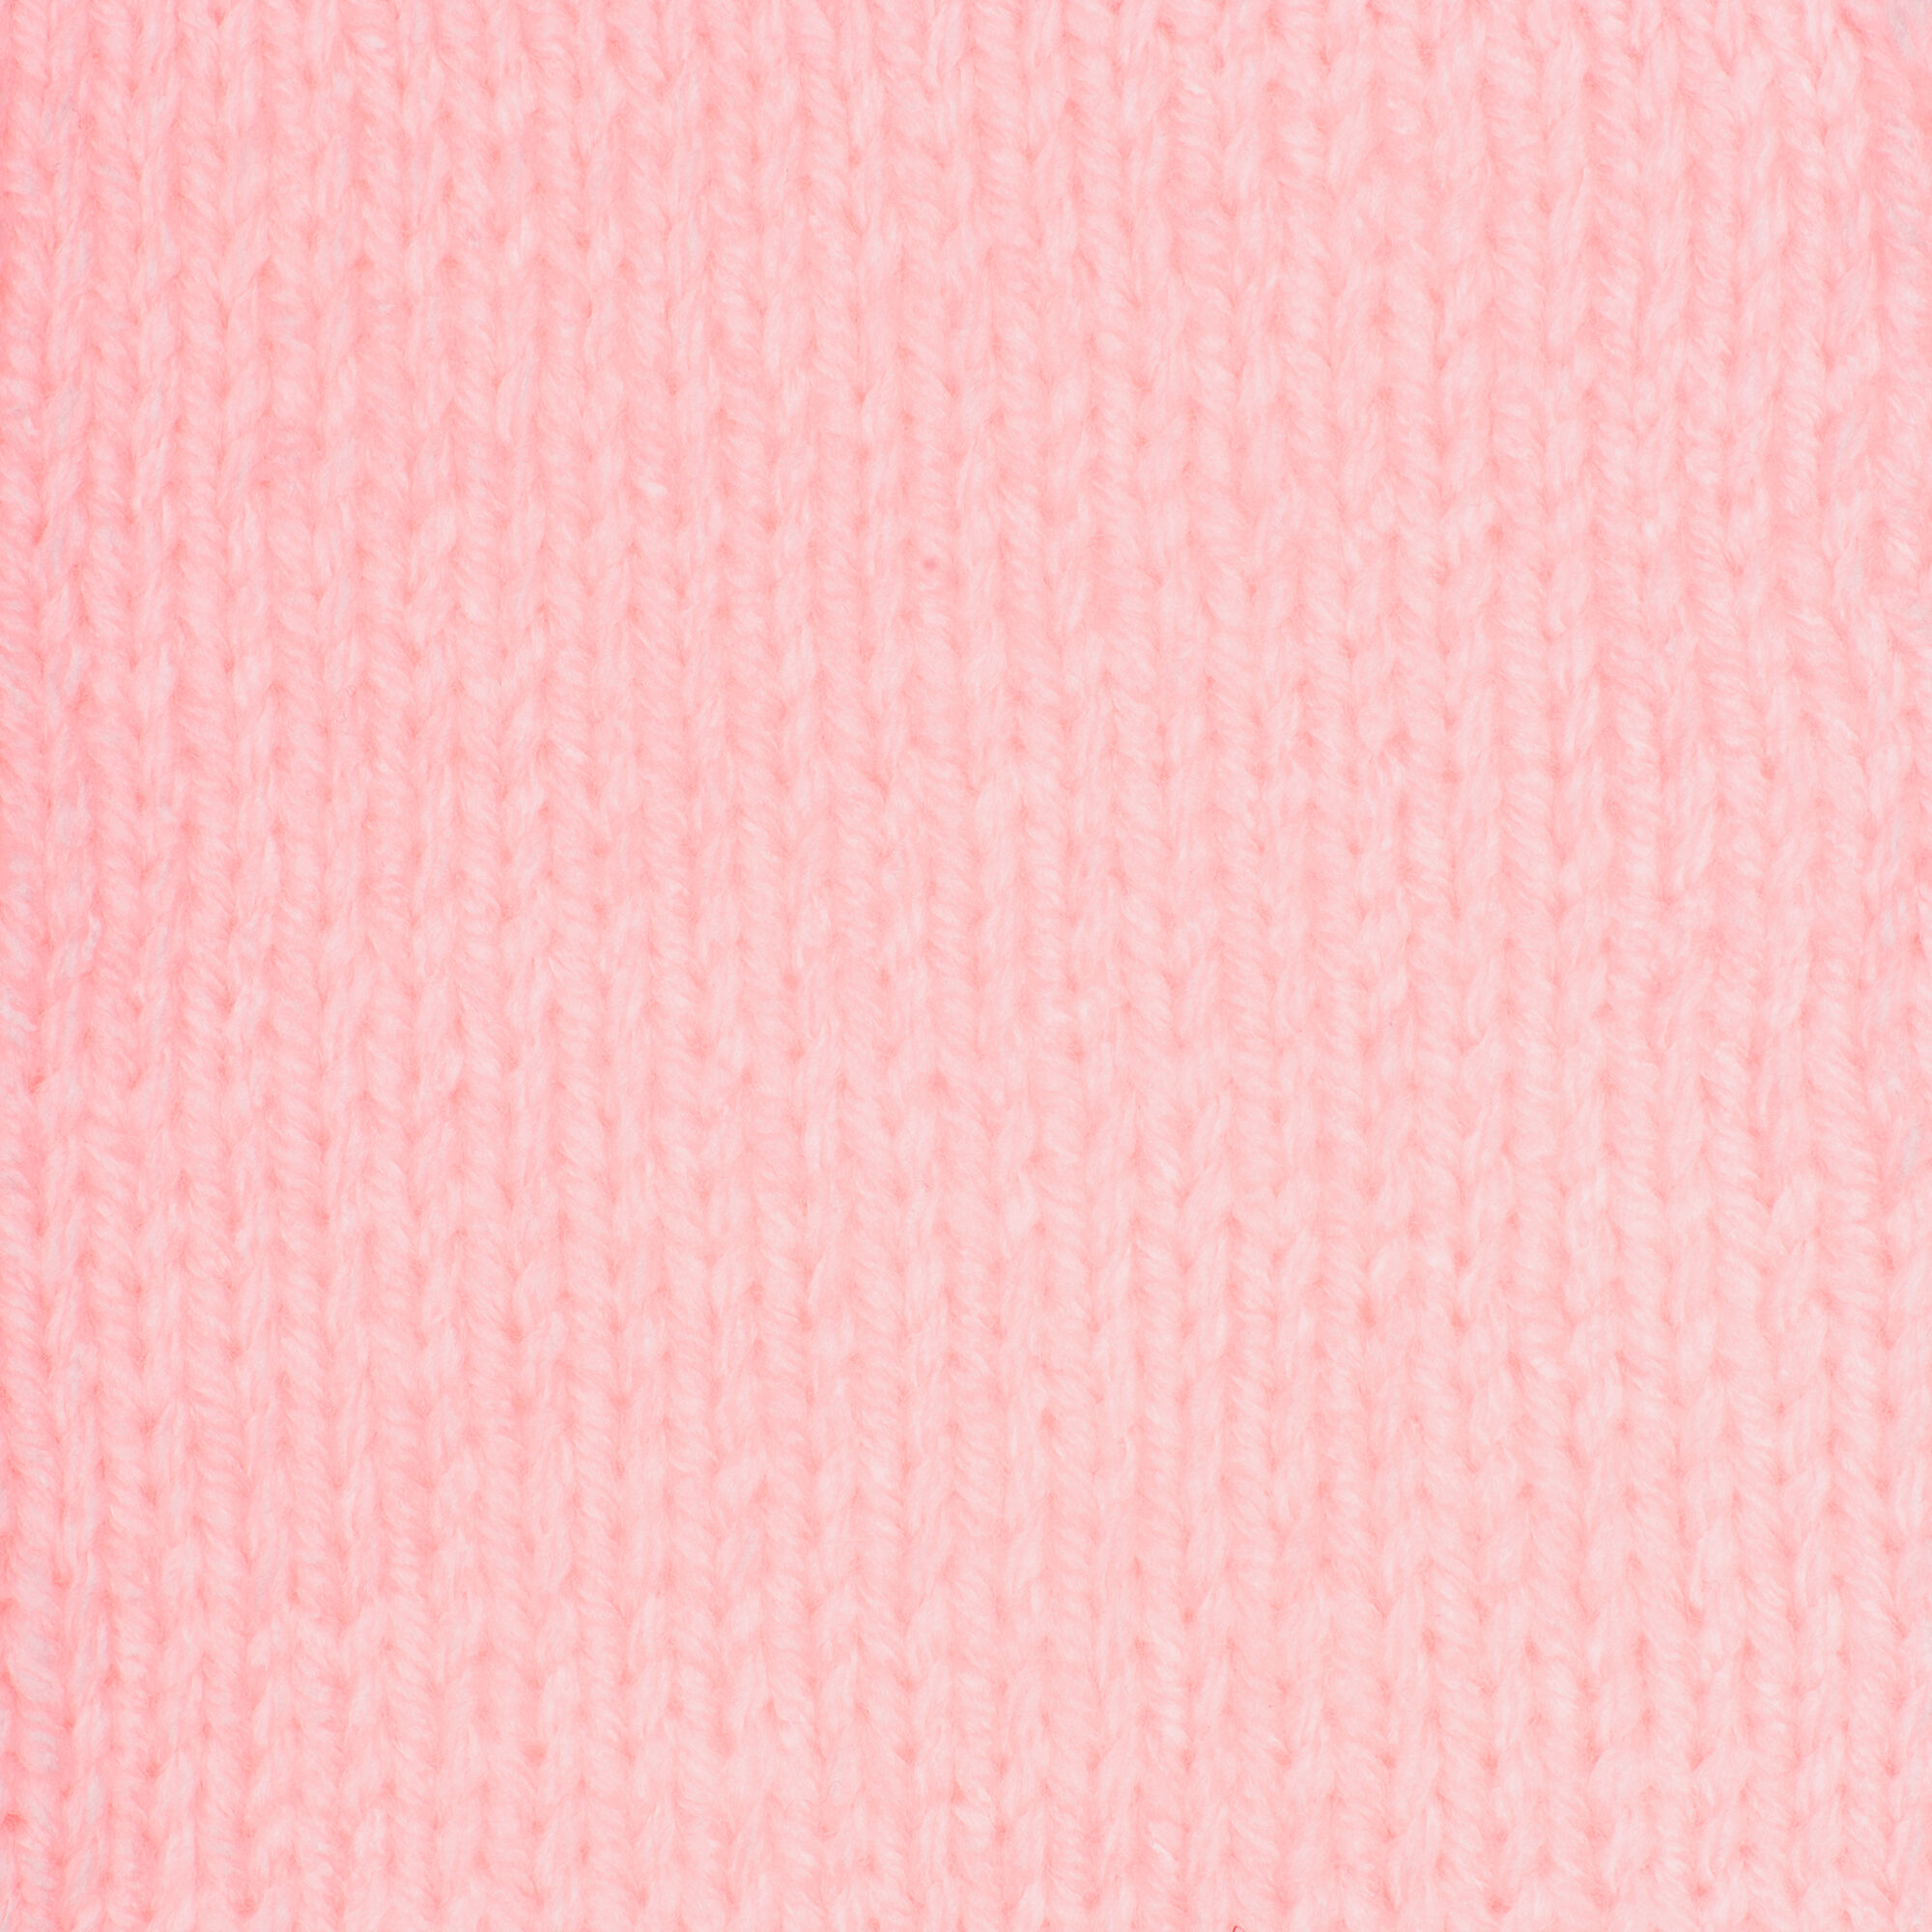 Red Heart Super Saver Yarn, Perfect Pink, 7oz(198g), Medium, Acrylic - image 5 of 16